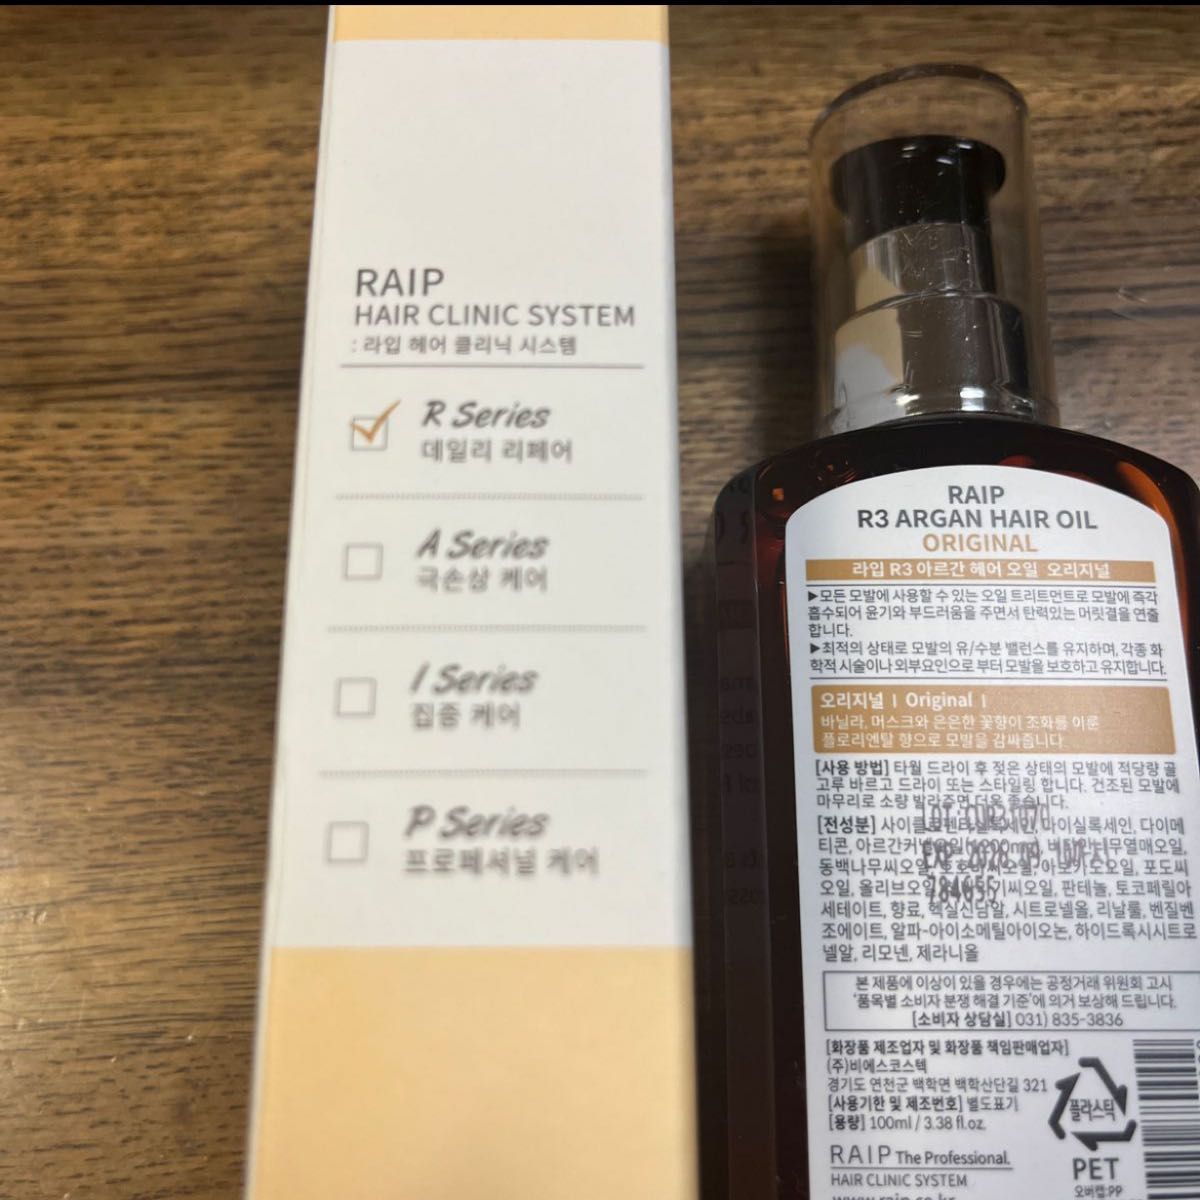 RAIPアルガン ヘアオイル3.38 floz. / 100 mlオリジナルの香り